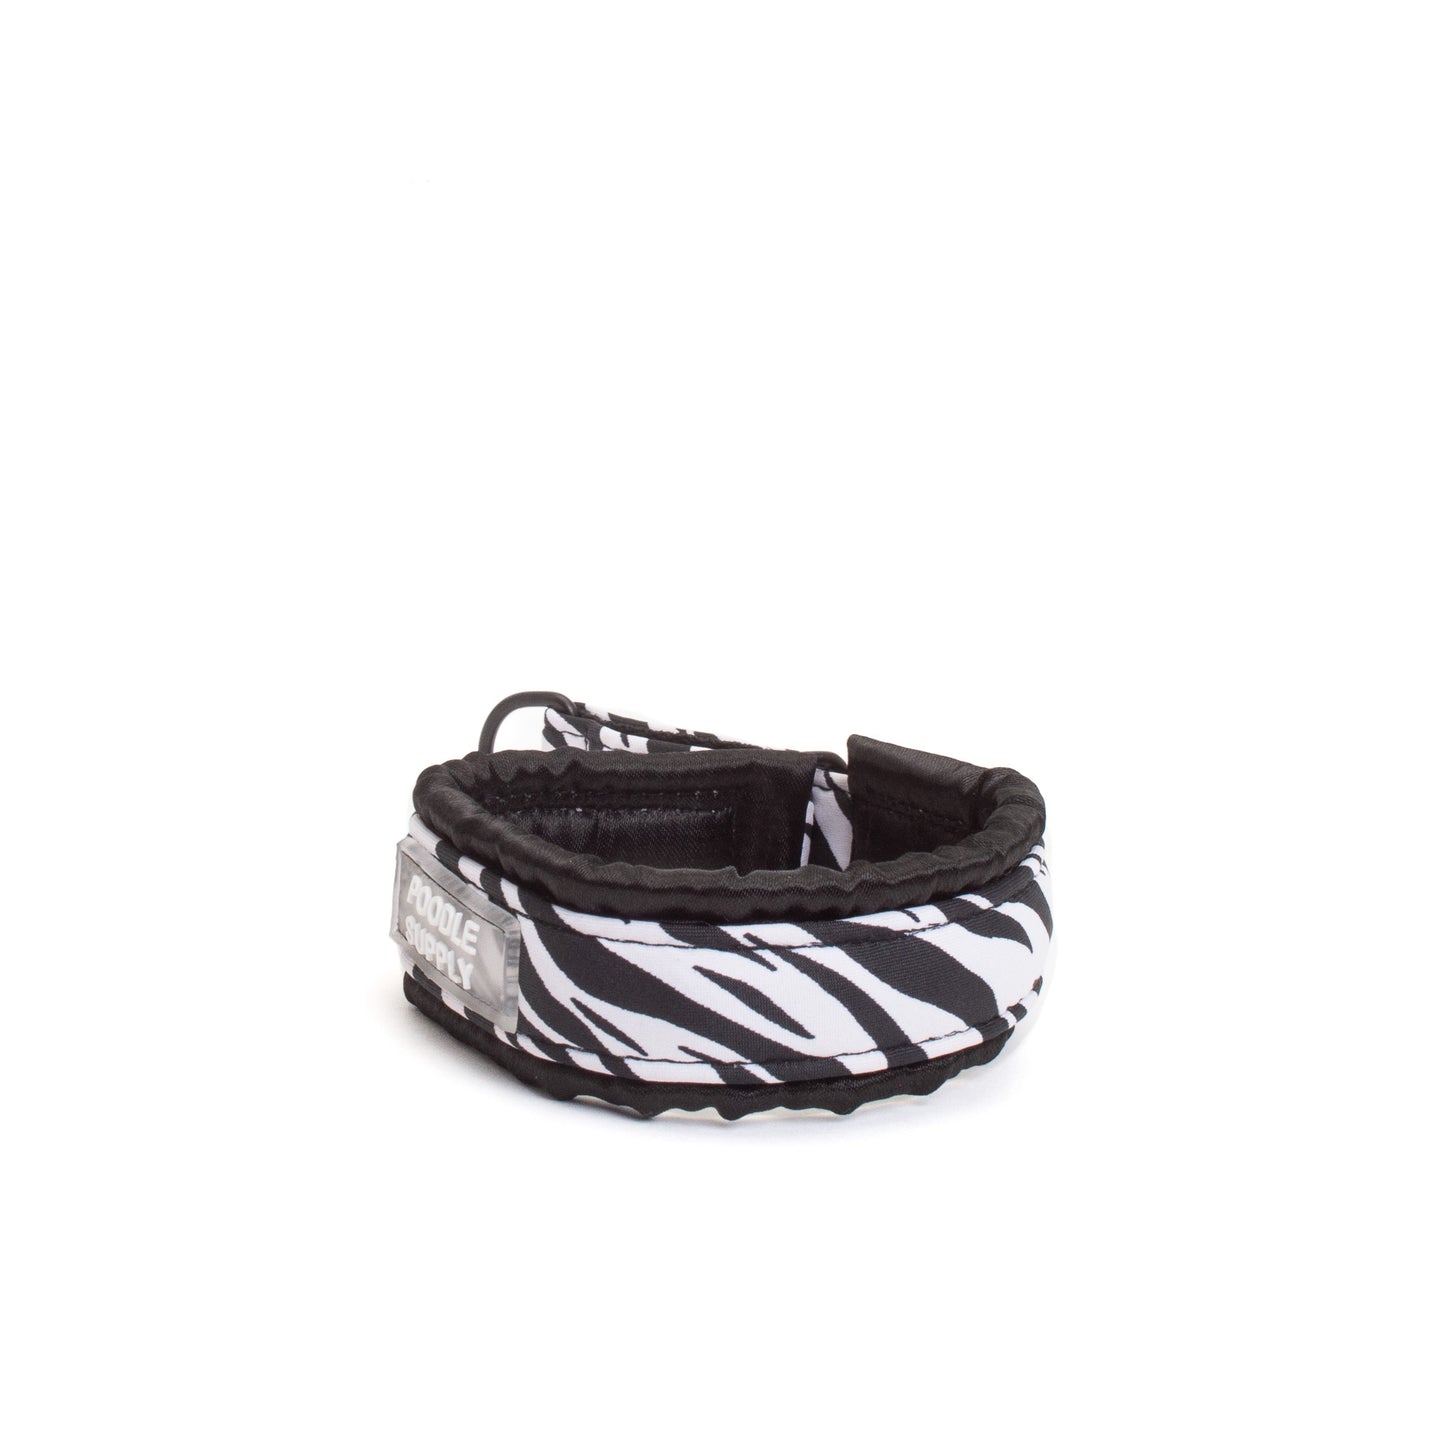 Small / Medium / Large Martingale Collar Poodle Supply Zebra